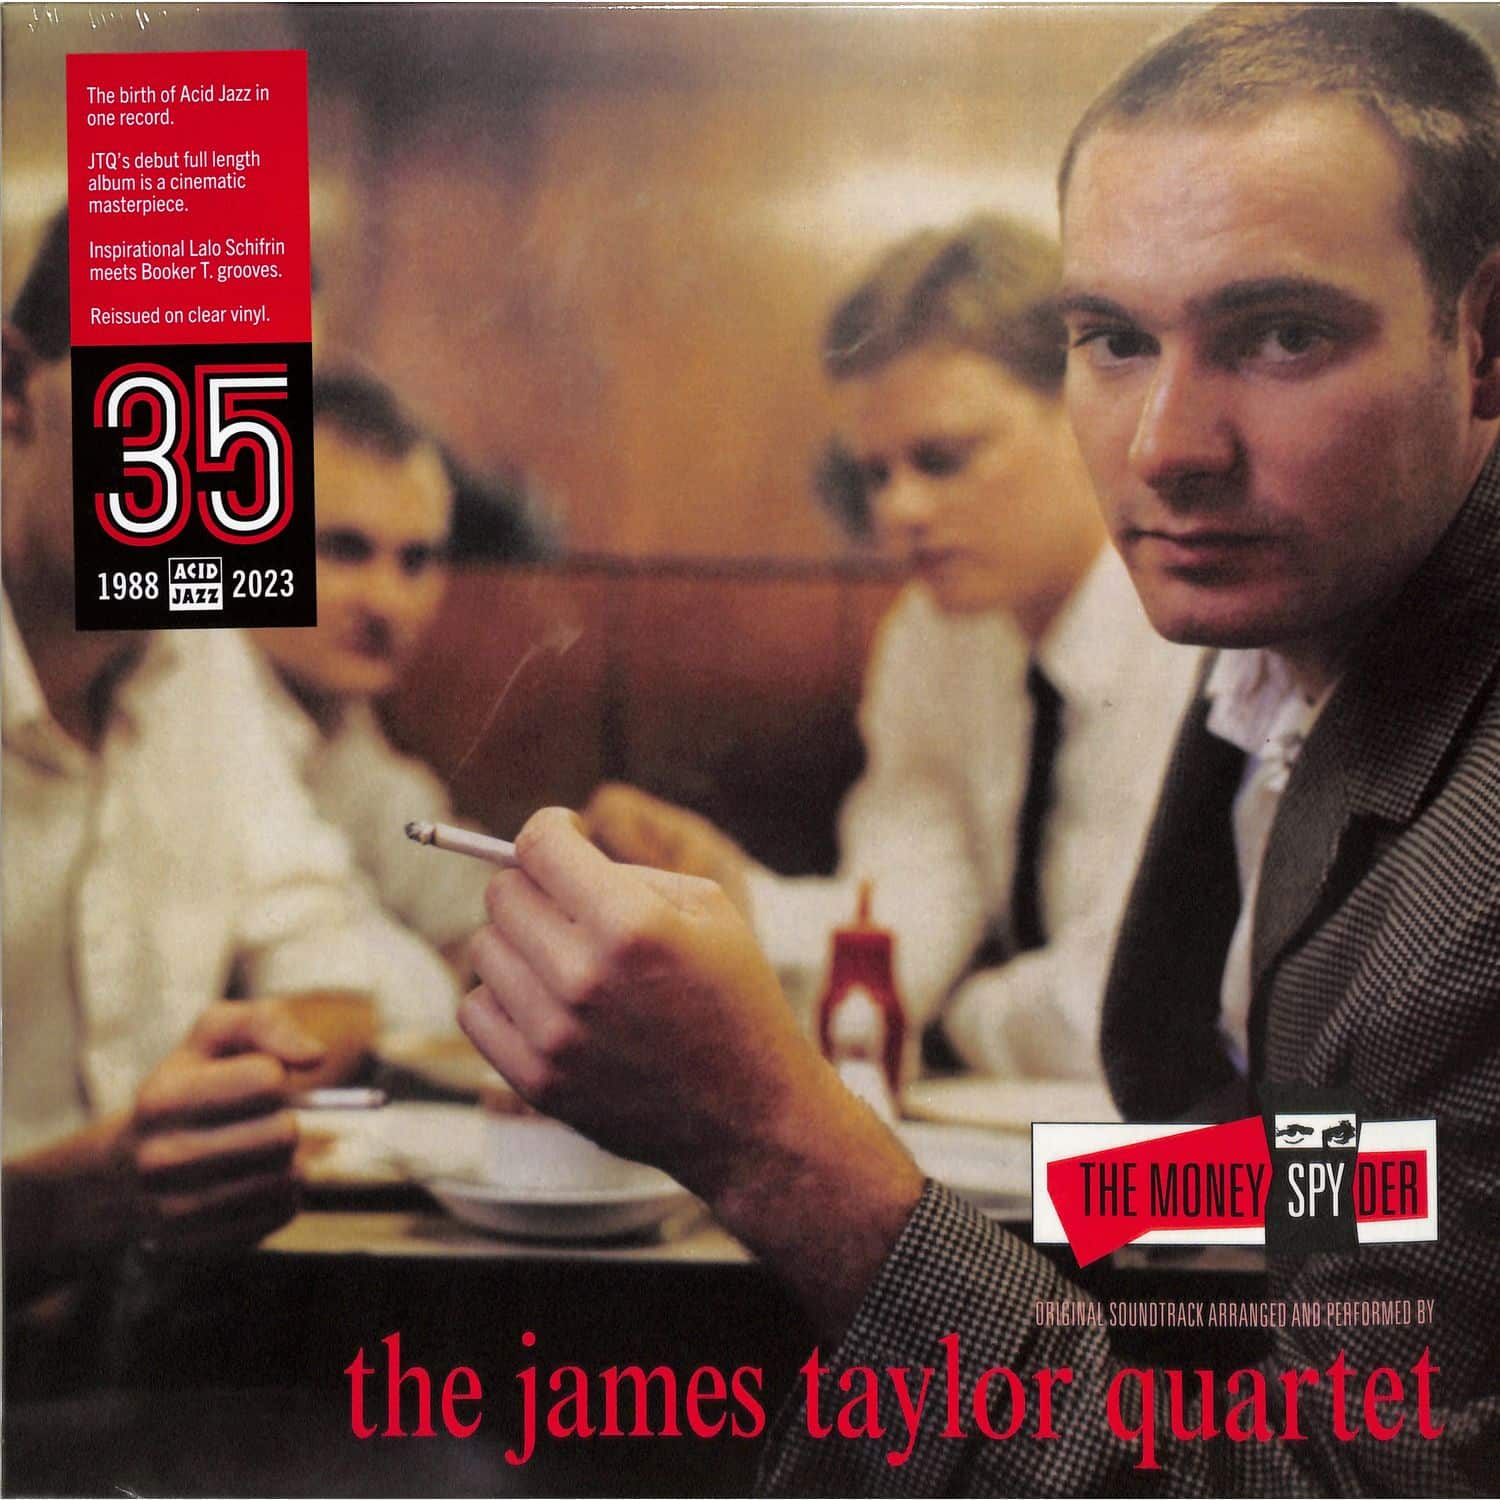 The James Taylor Quartet - THE MONEY SPYDER 